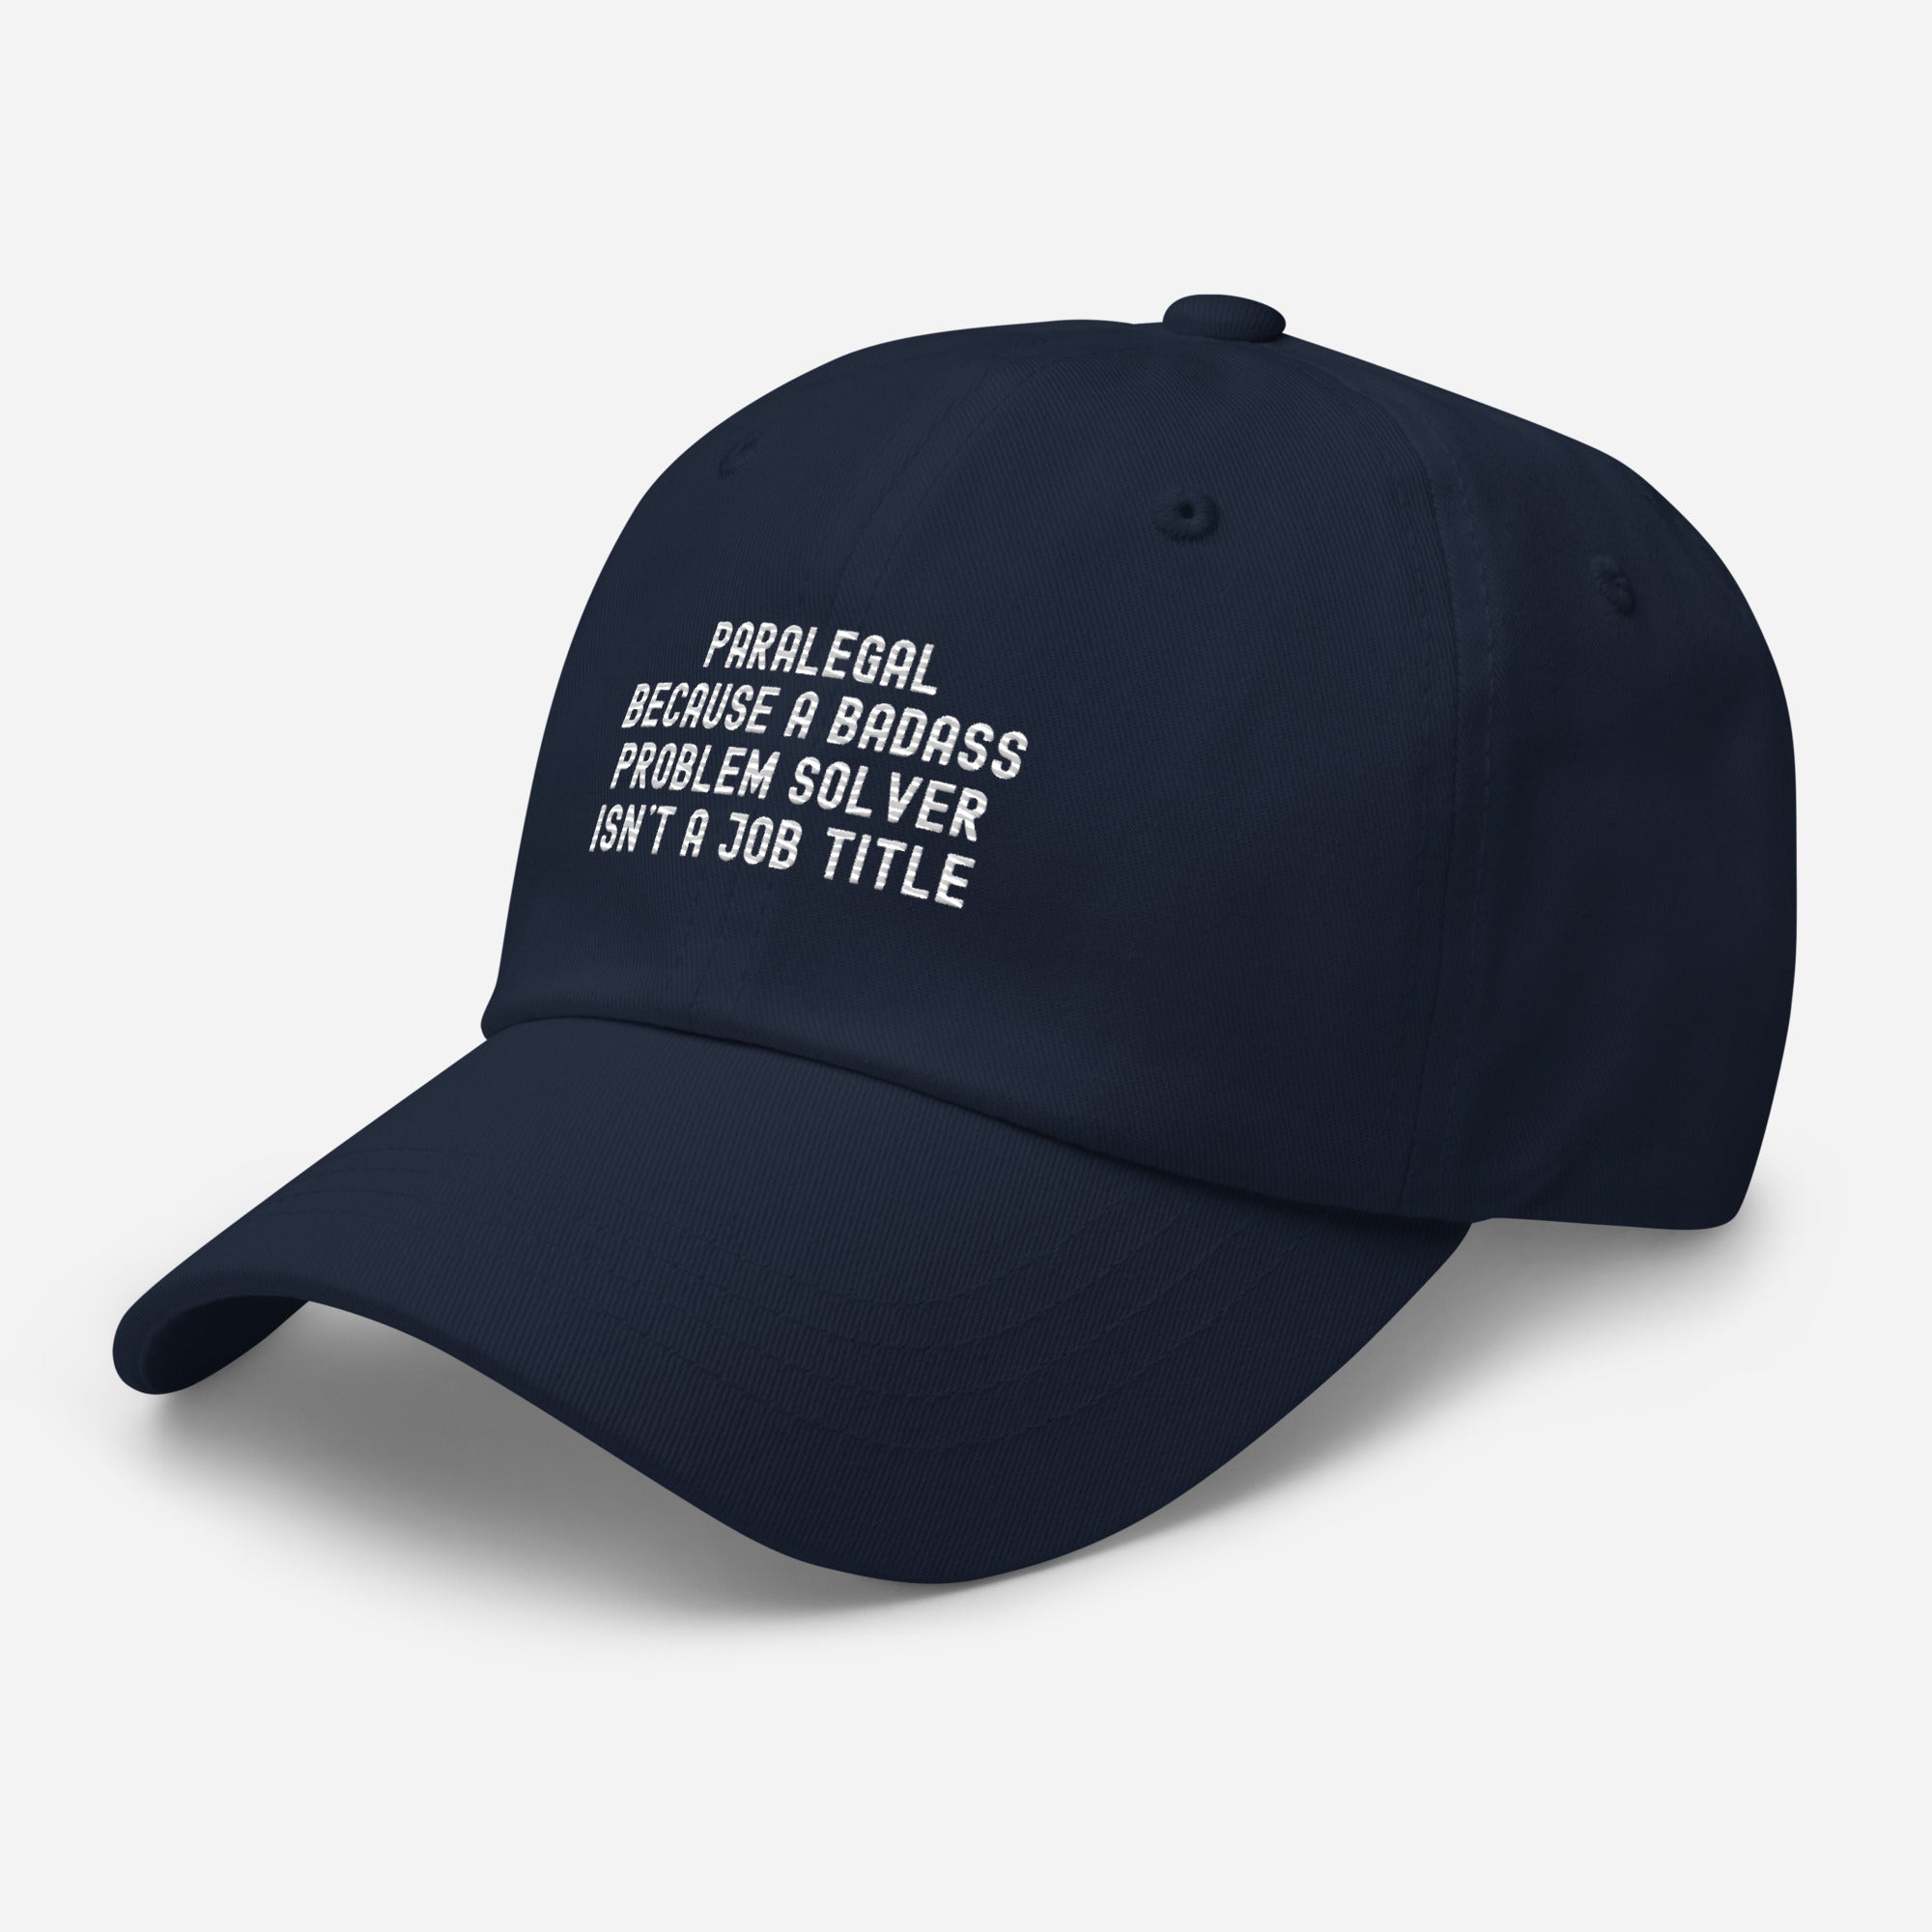 Hat | Paralegal because a badass problem solver isn’t a job title